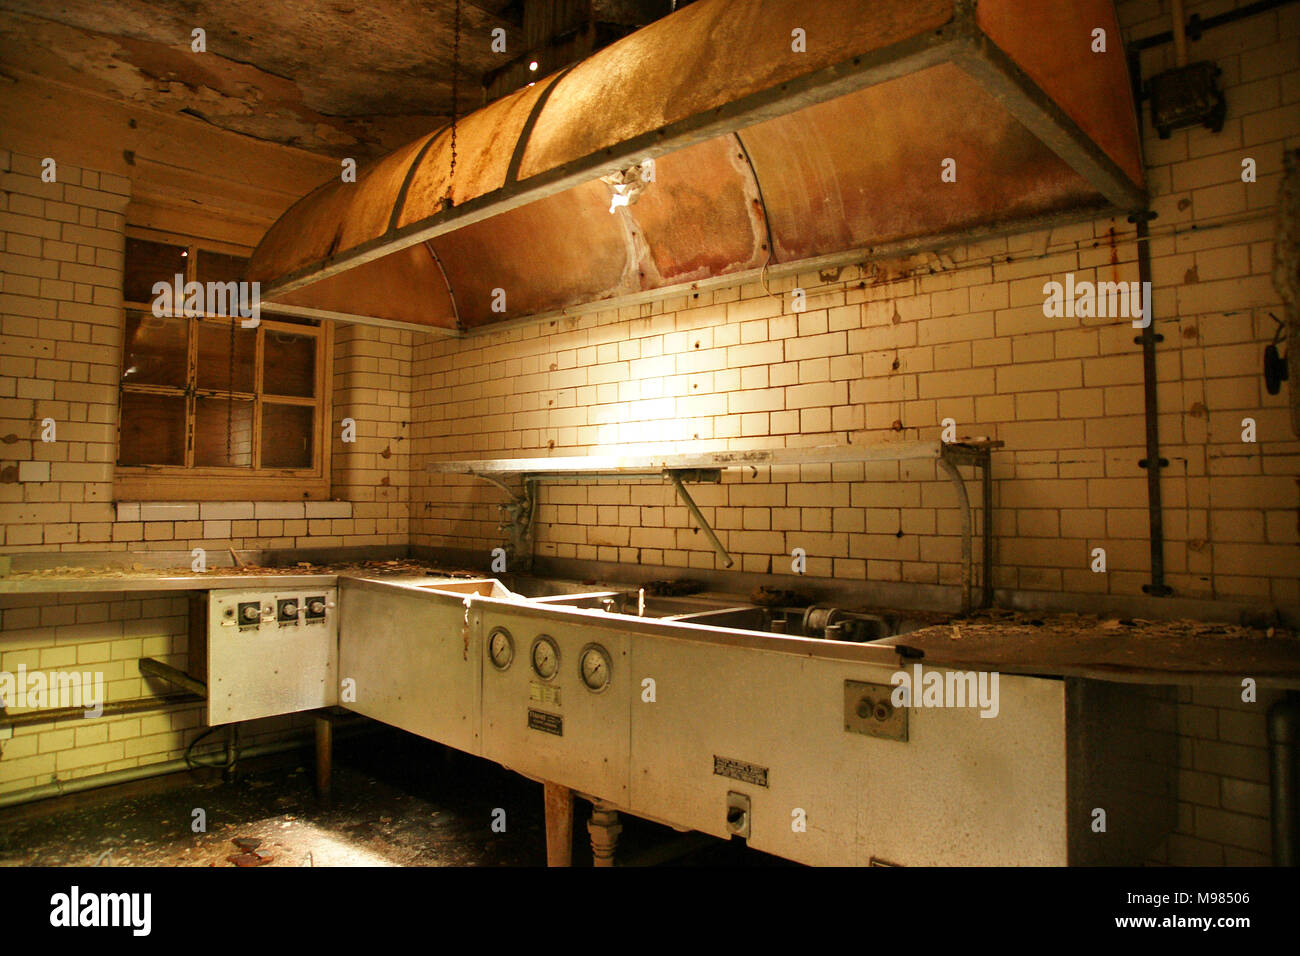 food hygiene, dirty kitchen, Stock Photo